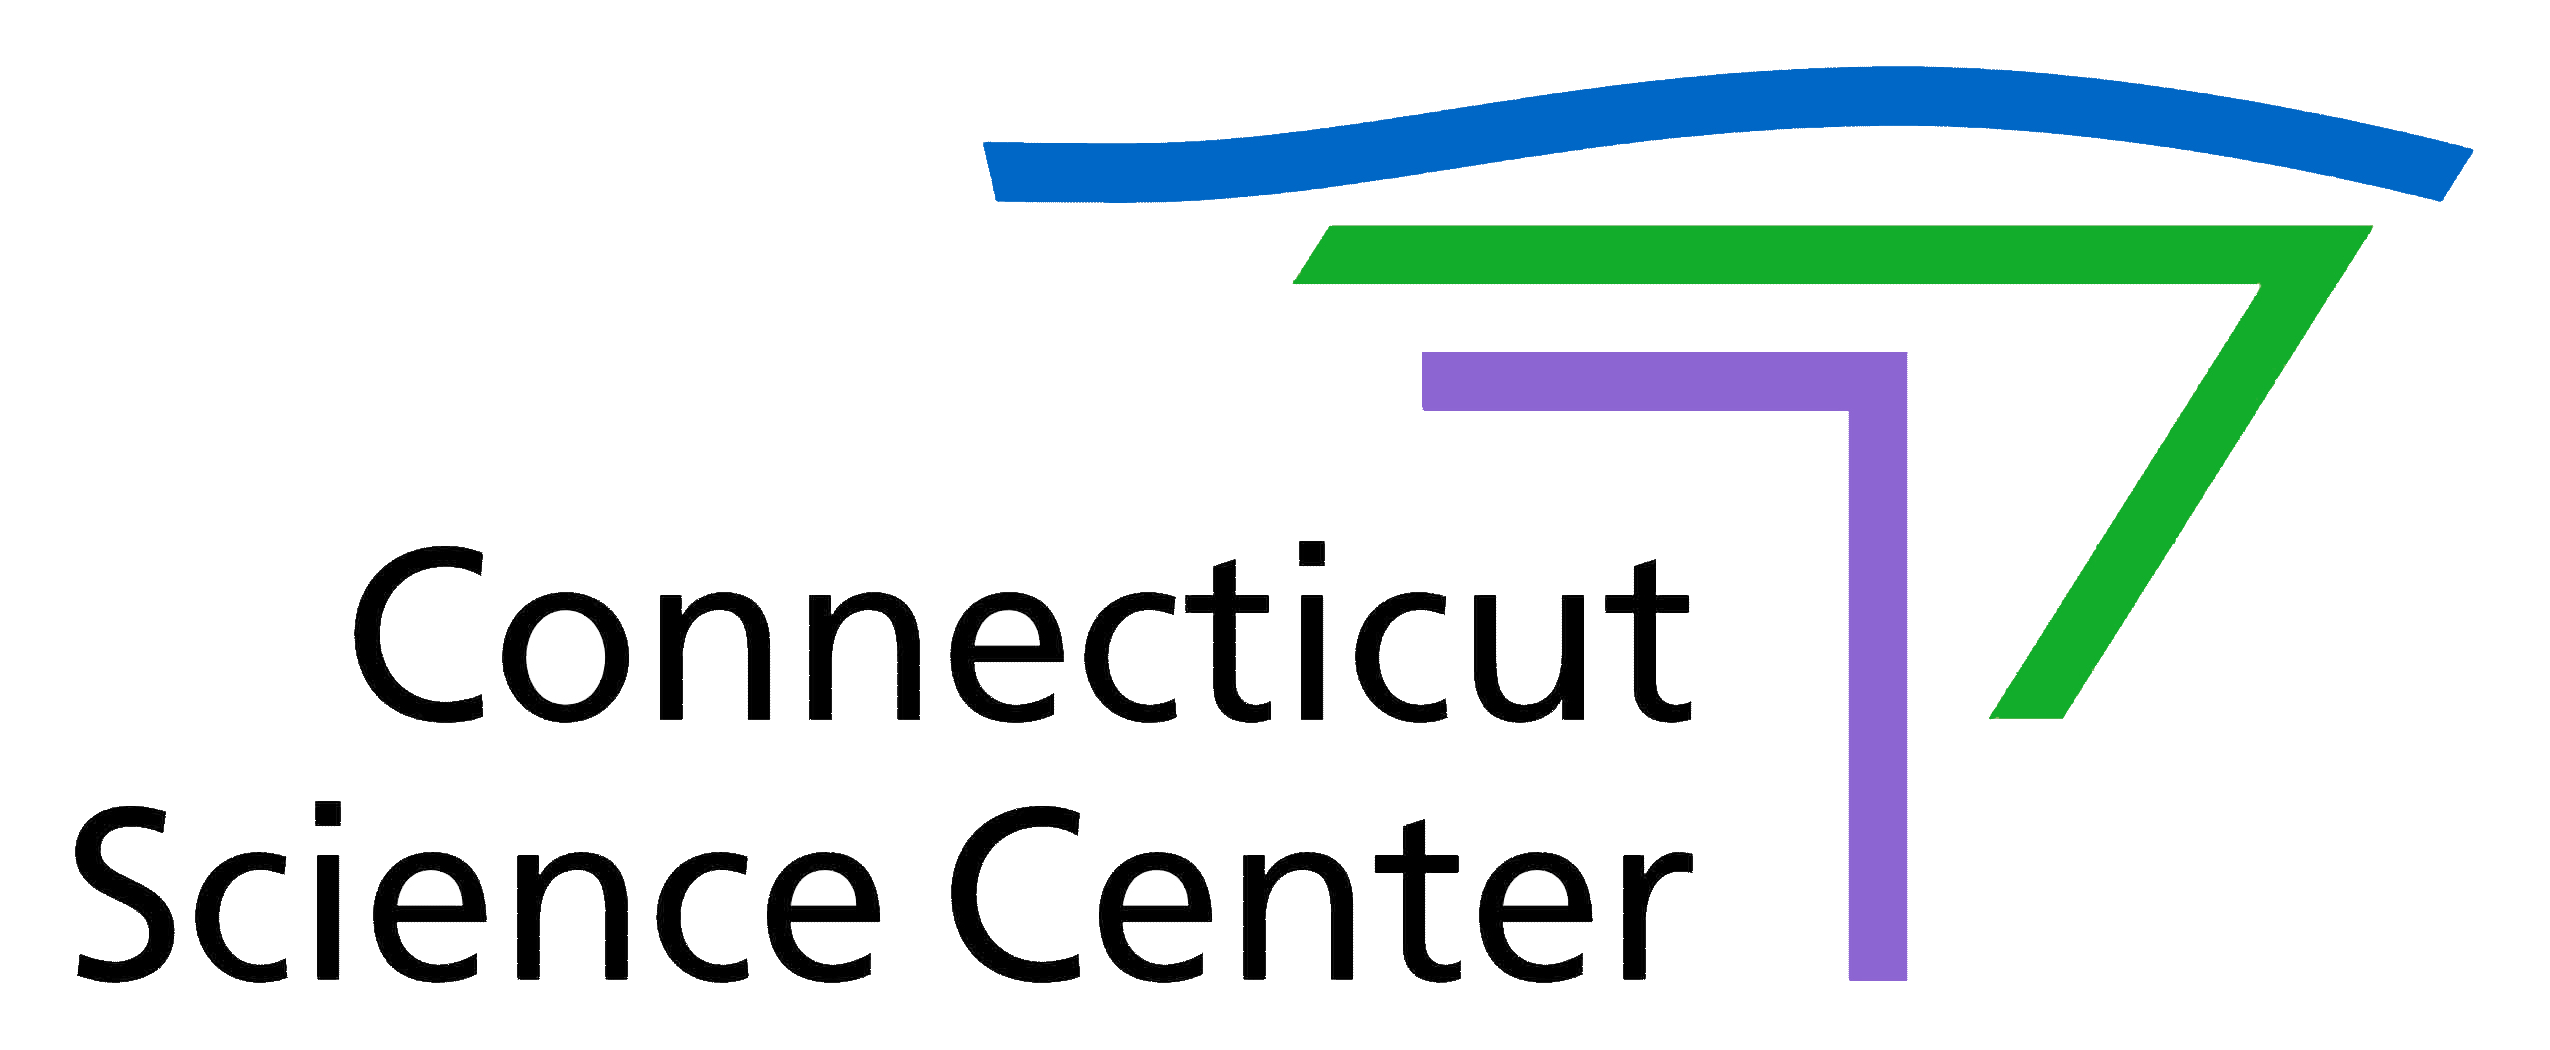 CT science center logo